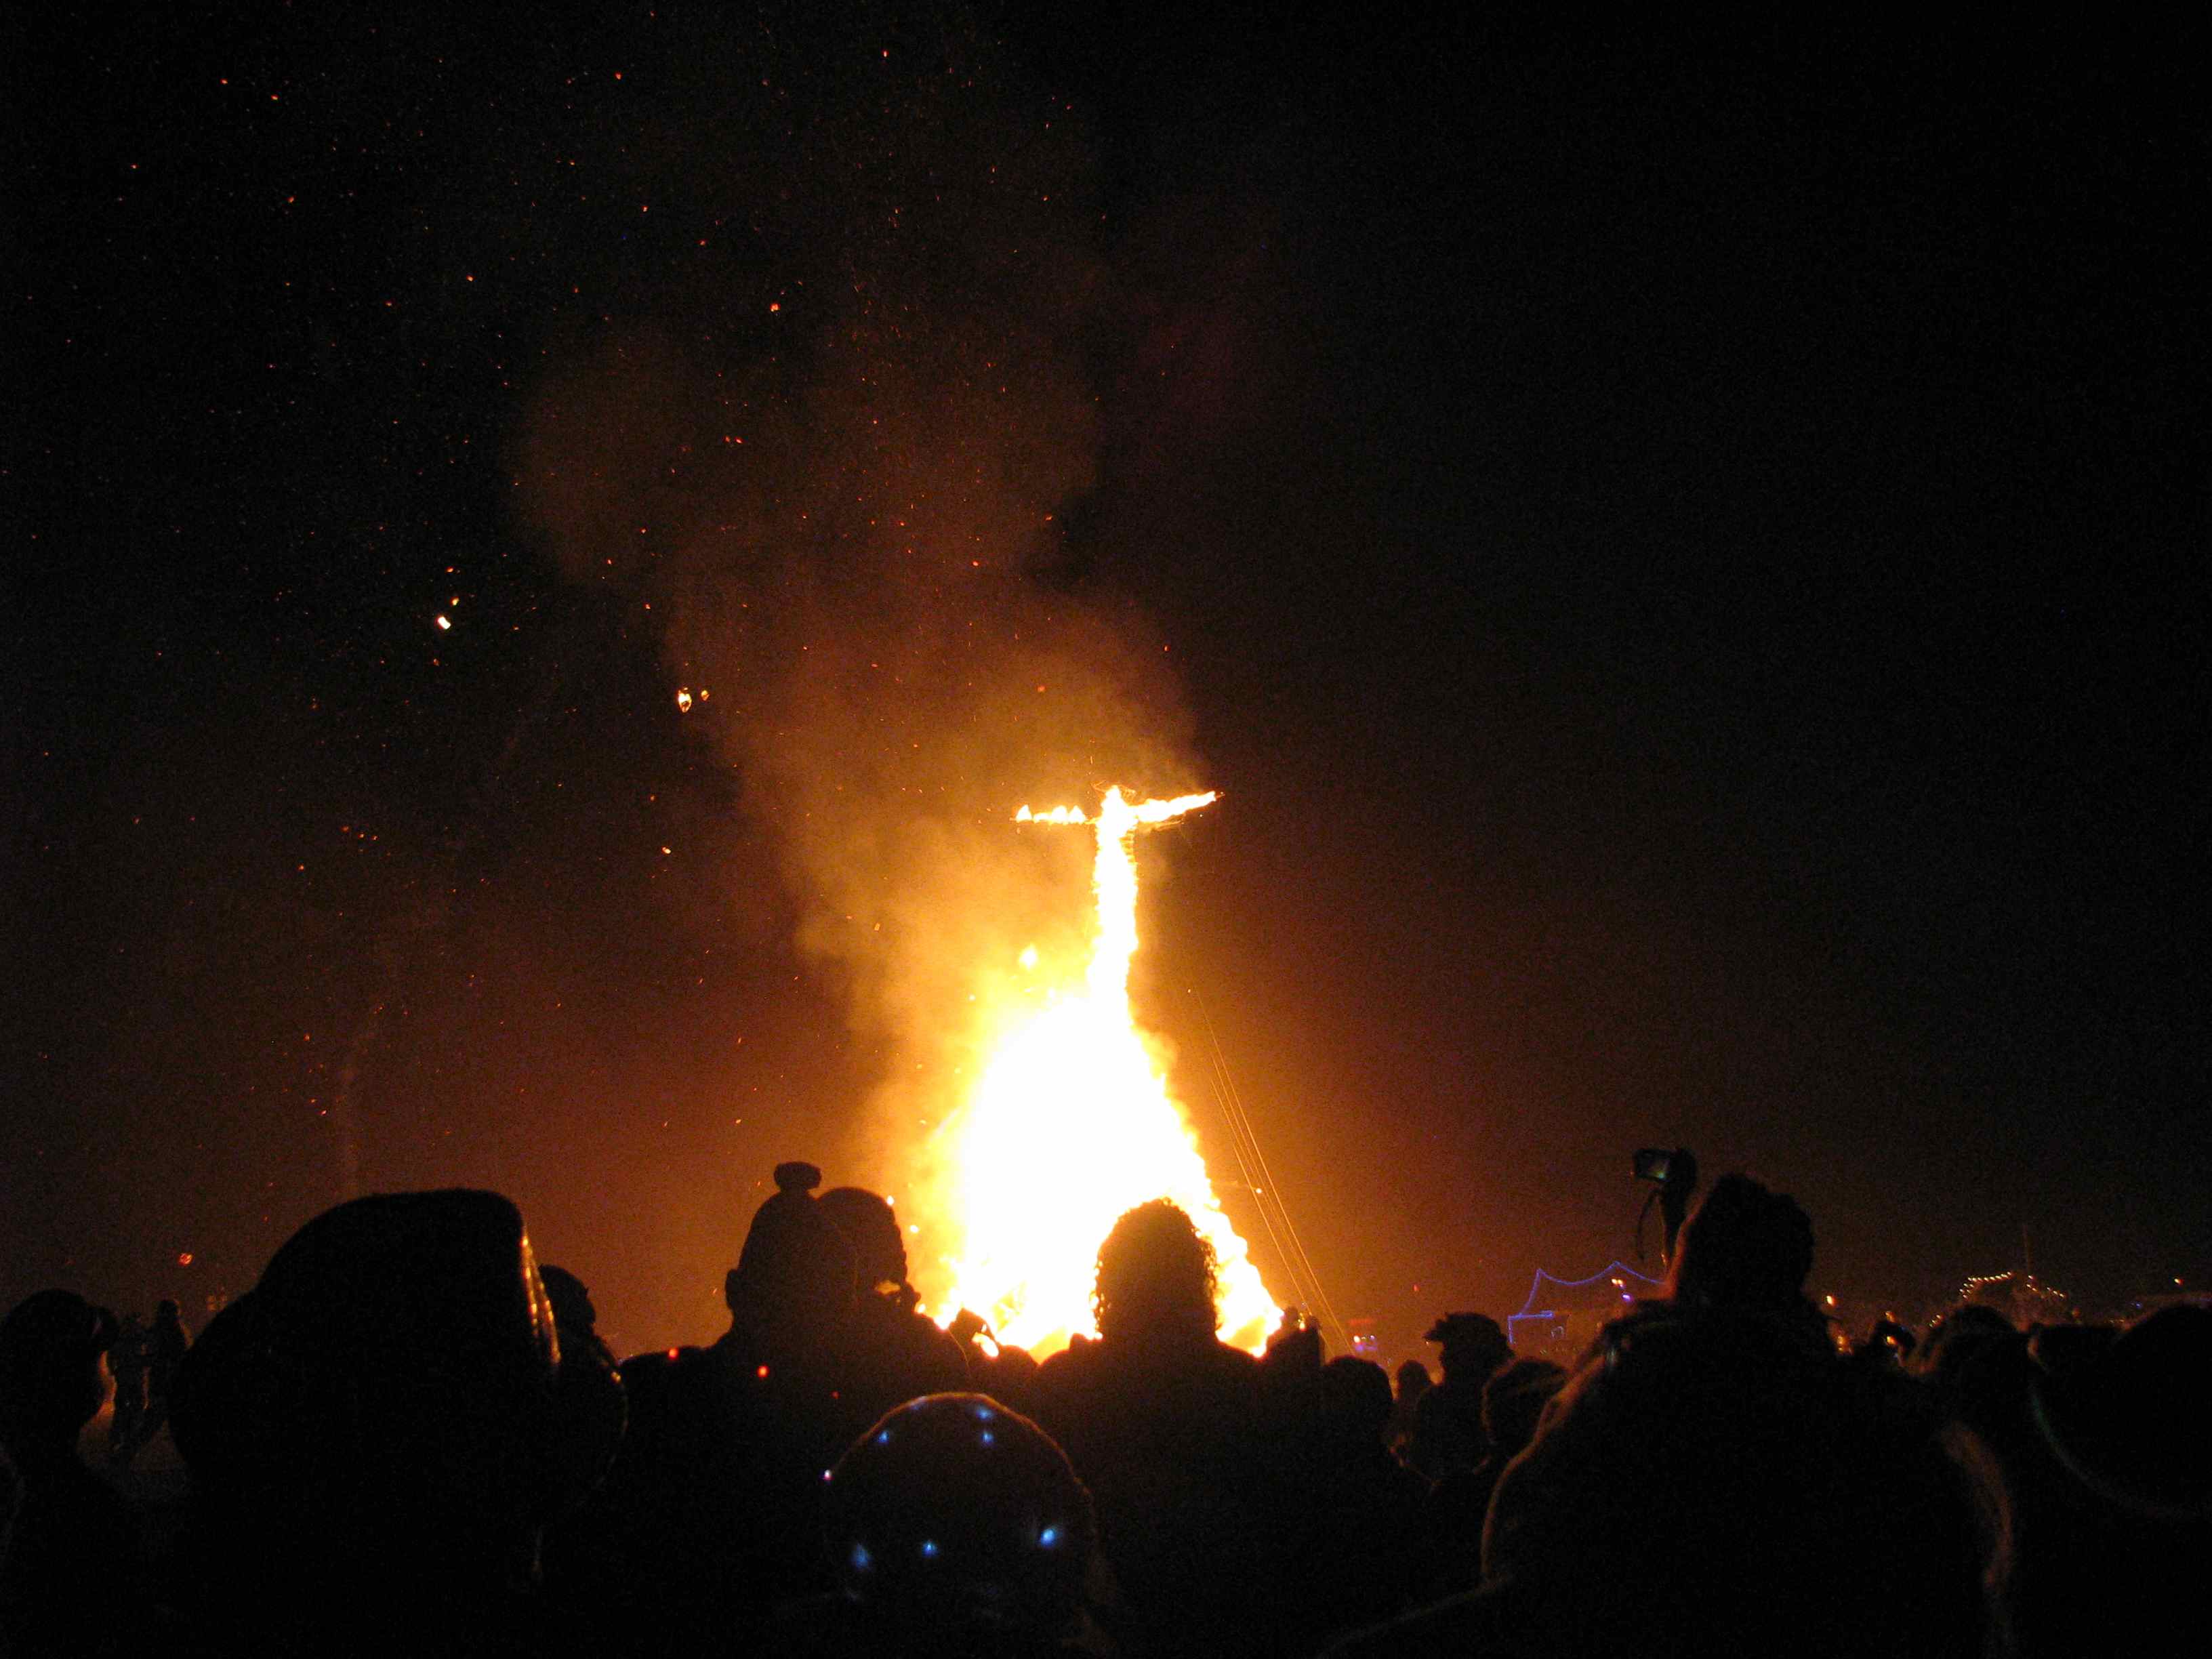 The Man on fire-Burning Man 2011